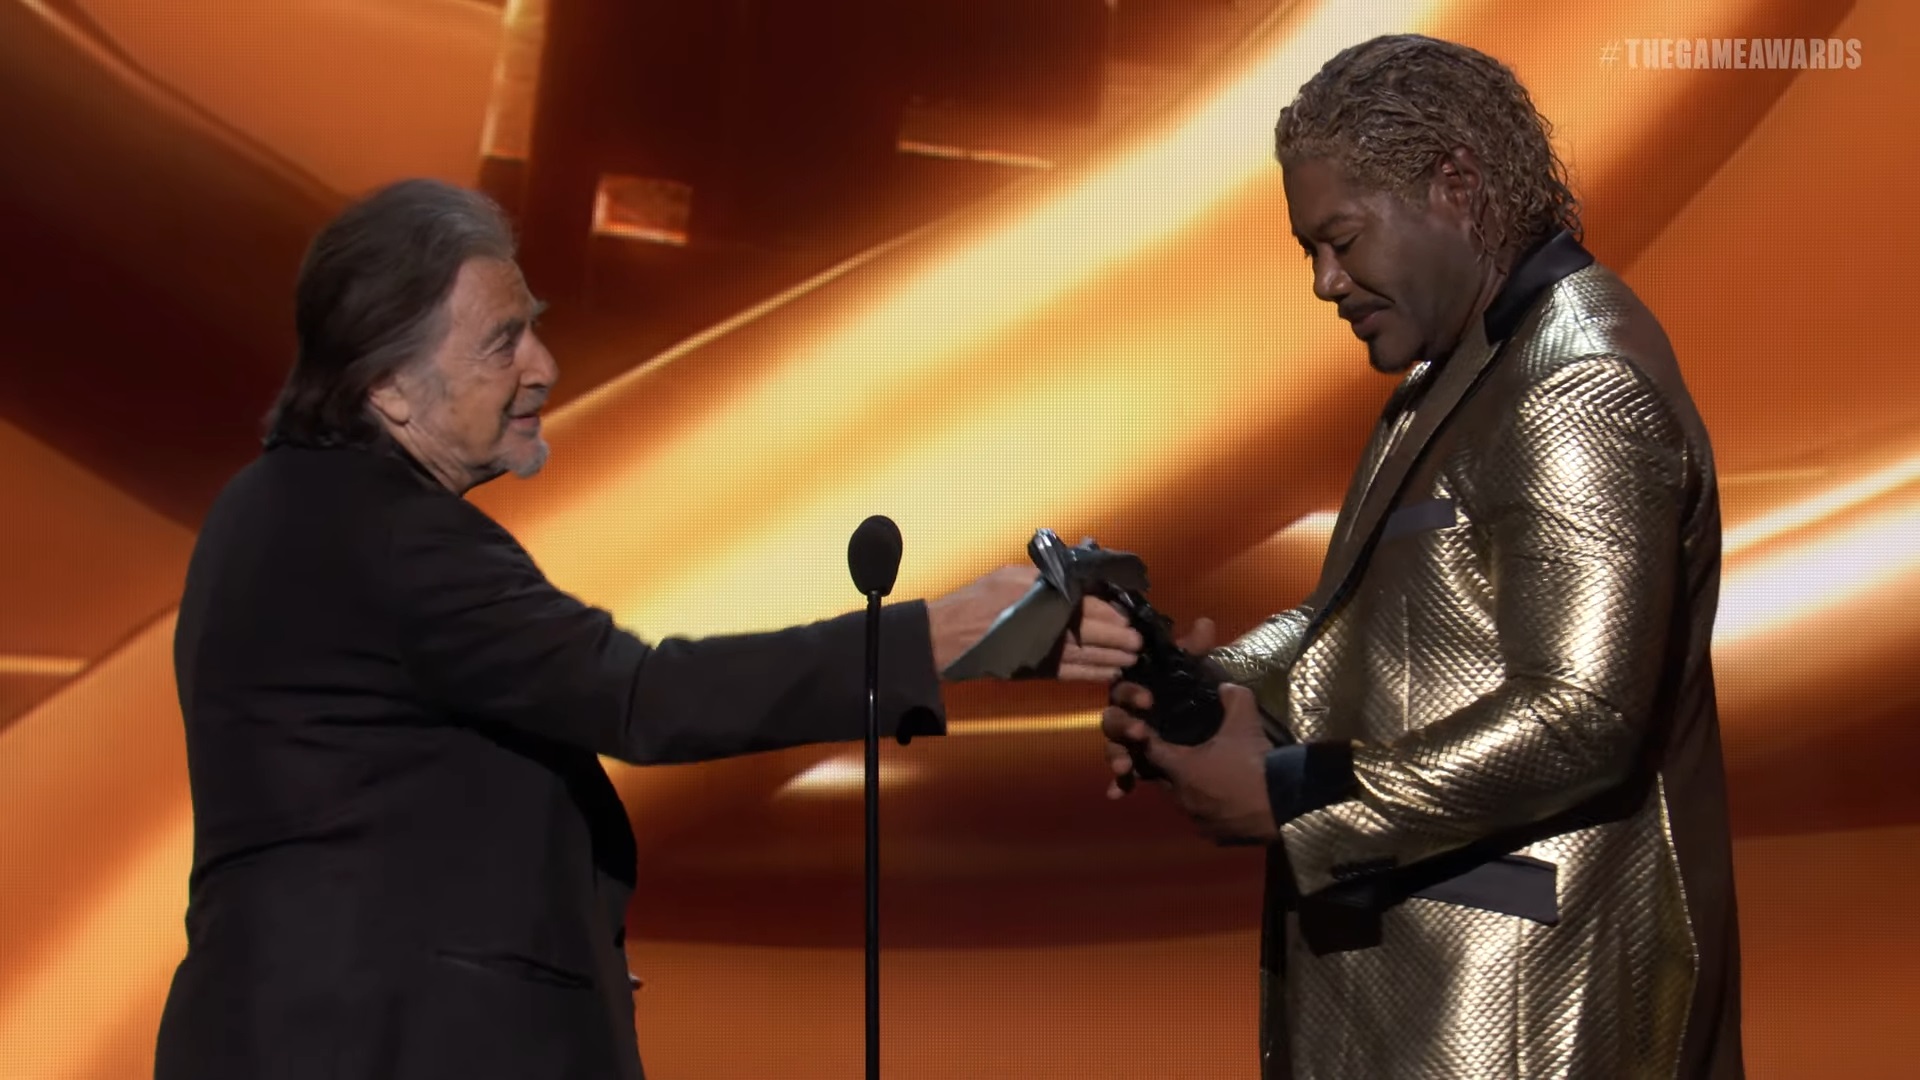 Al Pacino Presents The Game Award To Christopher Judge For God Of War  Ragnarok - GameSpot